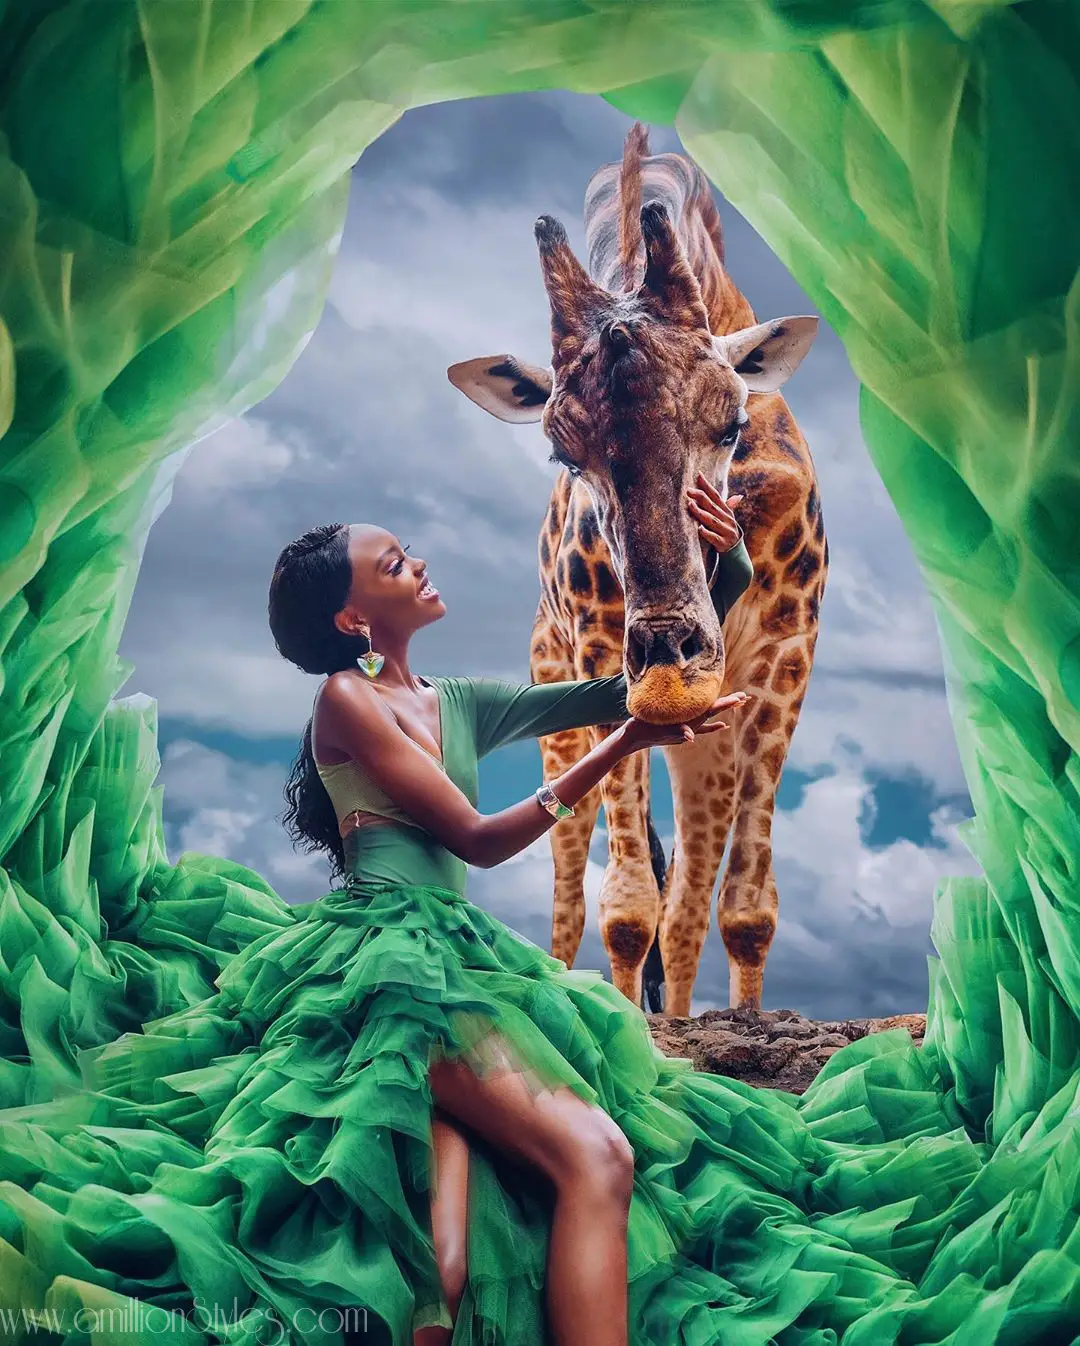 Miss Universe Kenya 2019 Looking Fabulous In This Wildlife Photoshoot